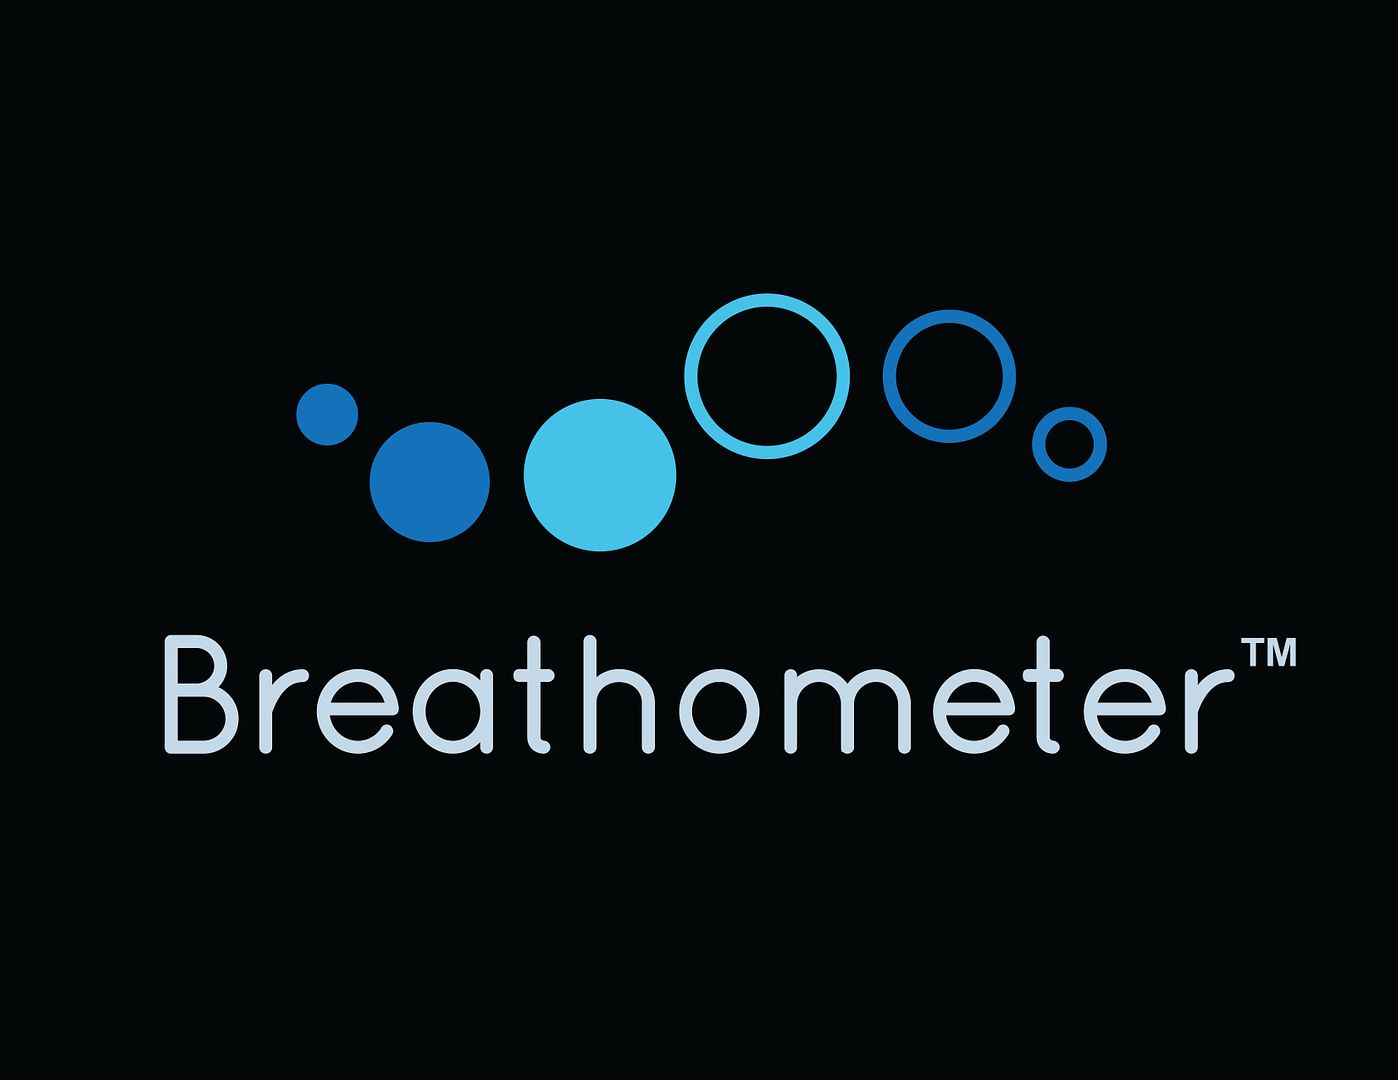 Breathometer logo